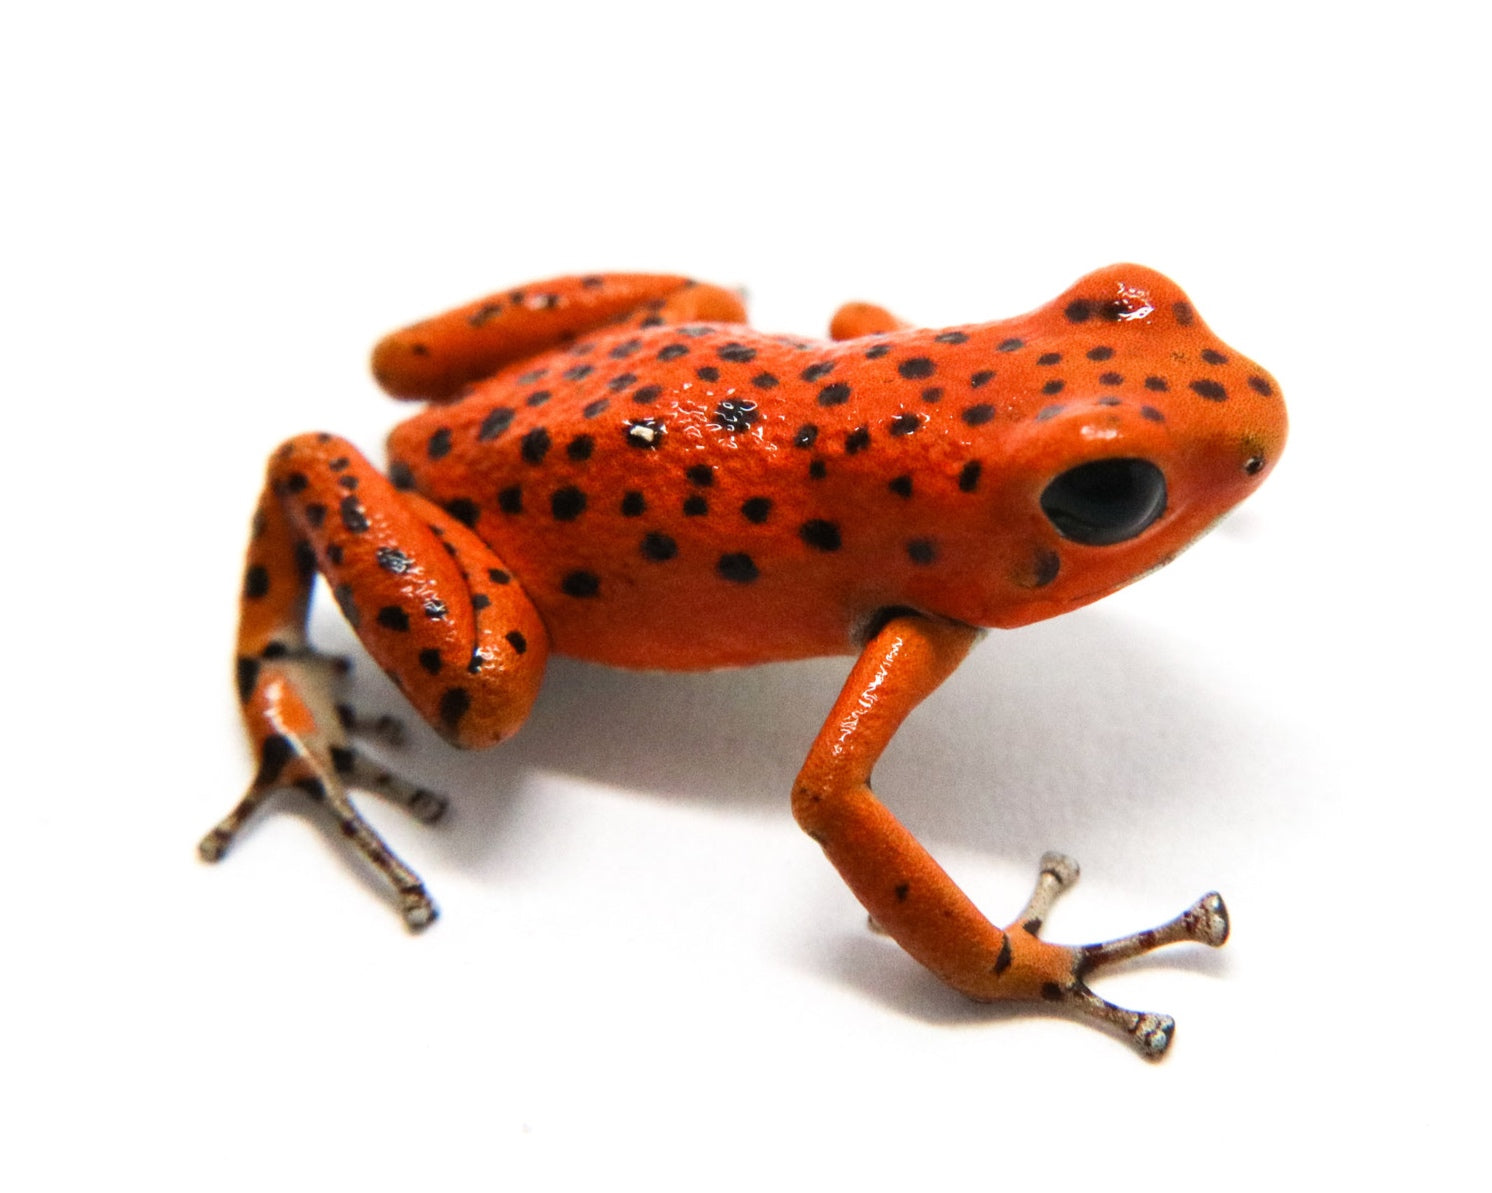 Drave Poke Frog - Mermentribe- Online Tackles Store